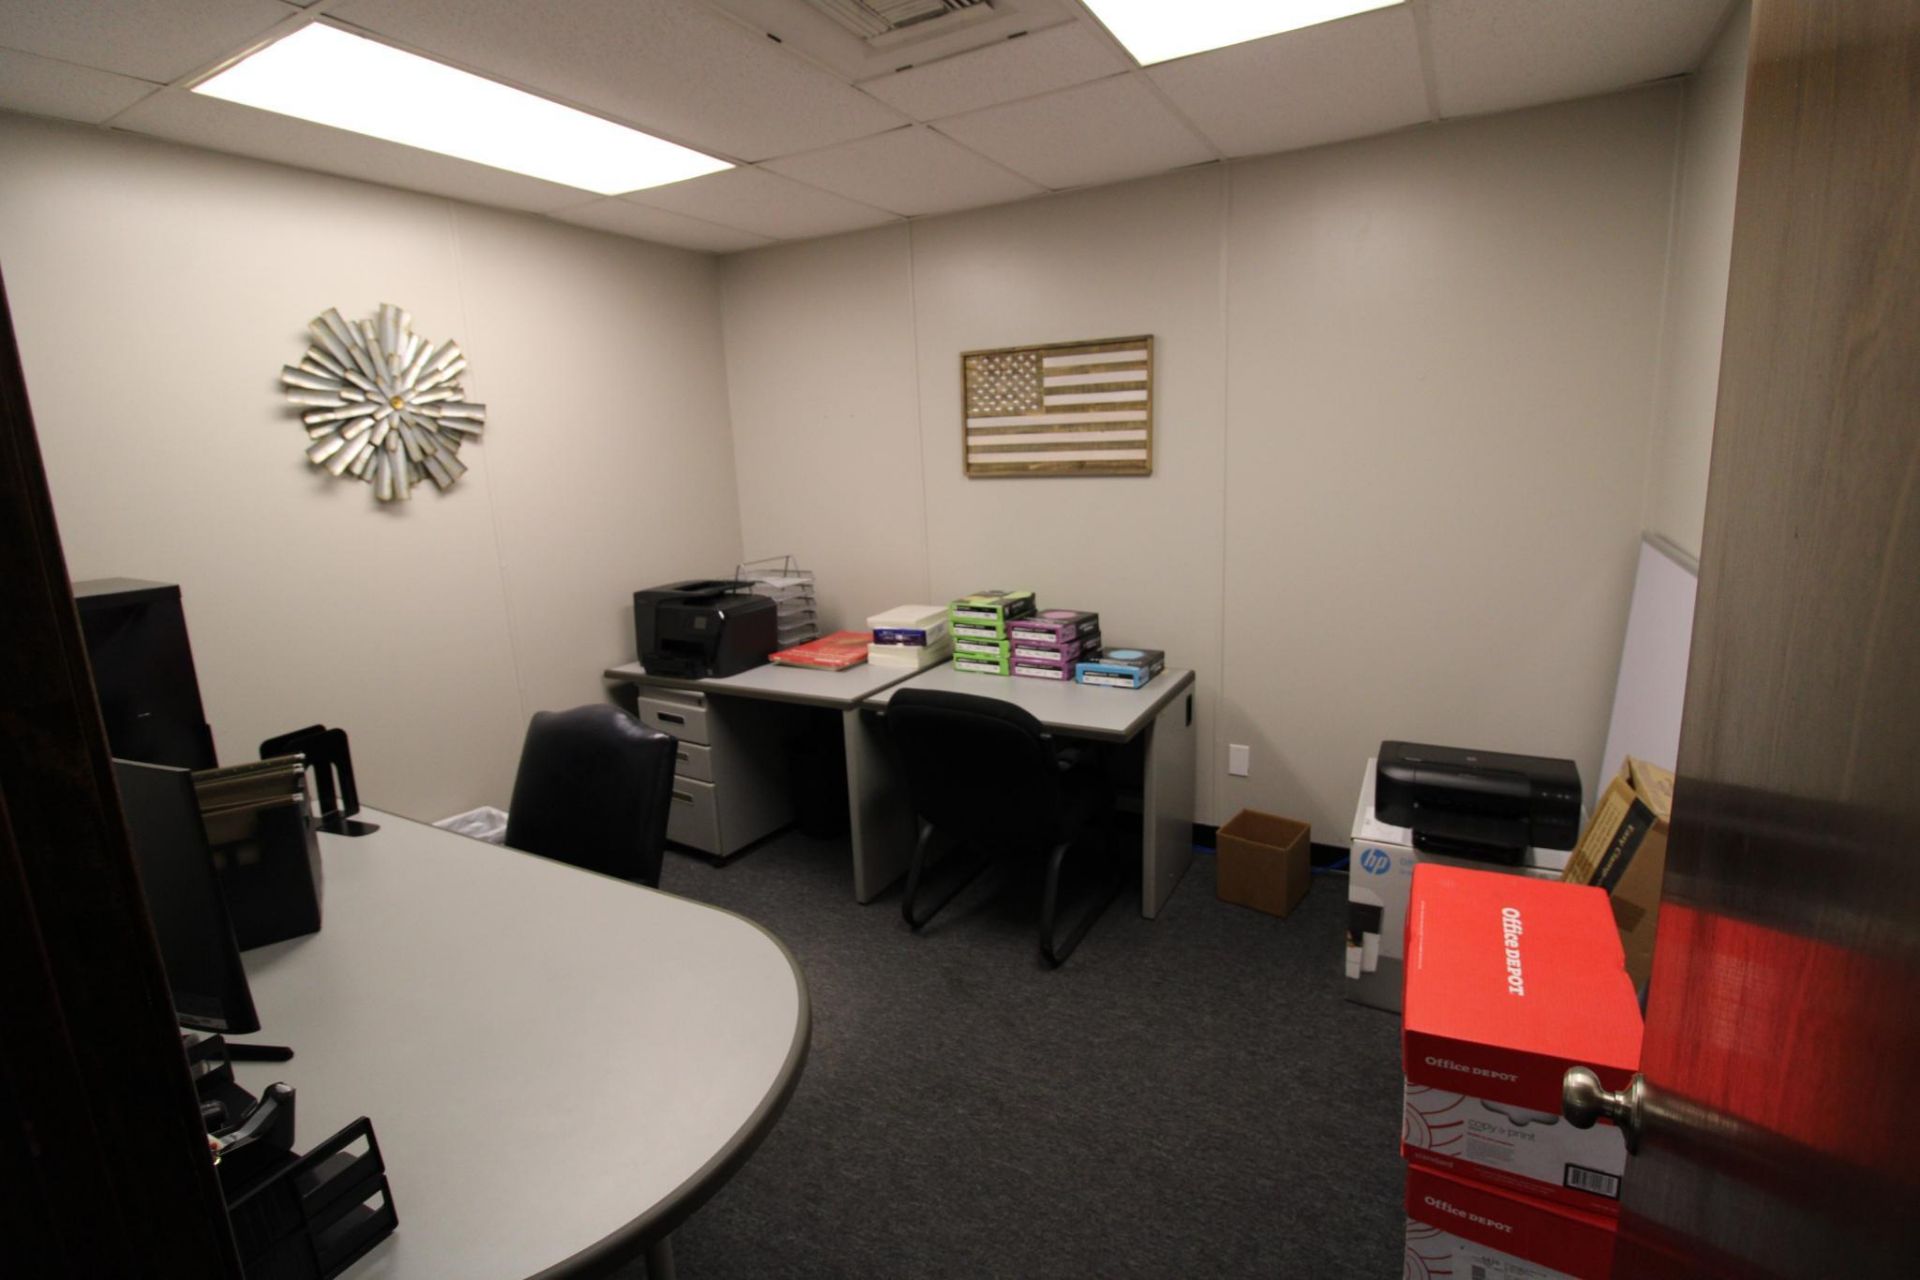 LOT CONTENTS OF OFFICE: desk, credenza, file cabinet, copy paper, printers, etc.